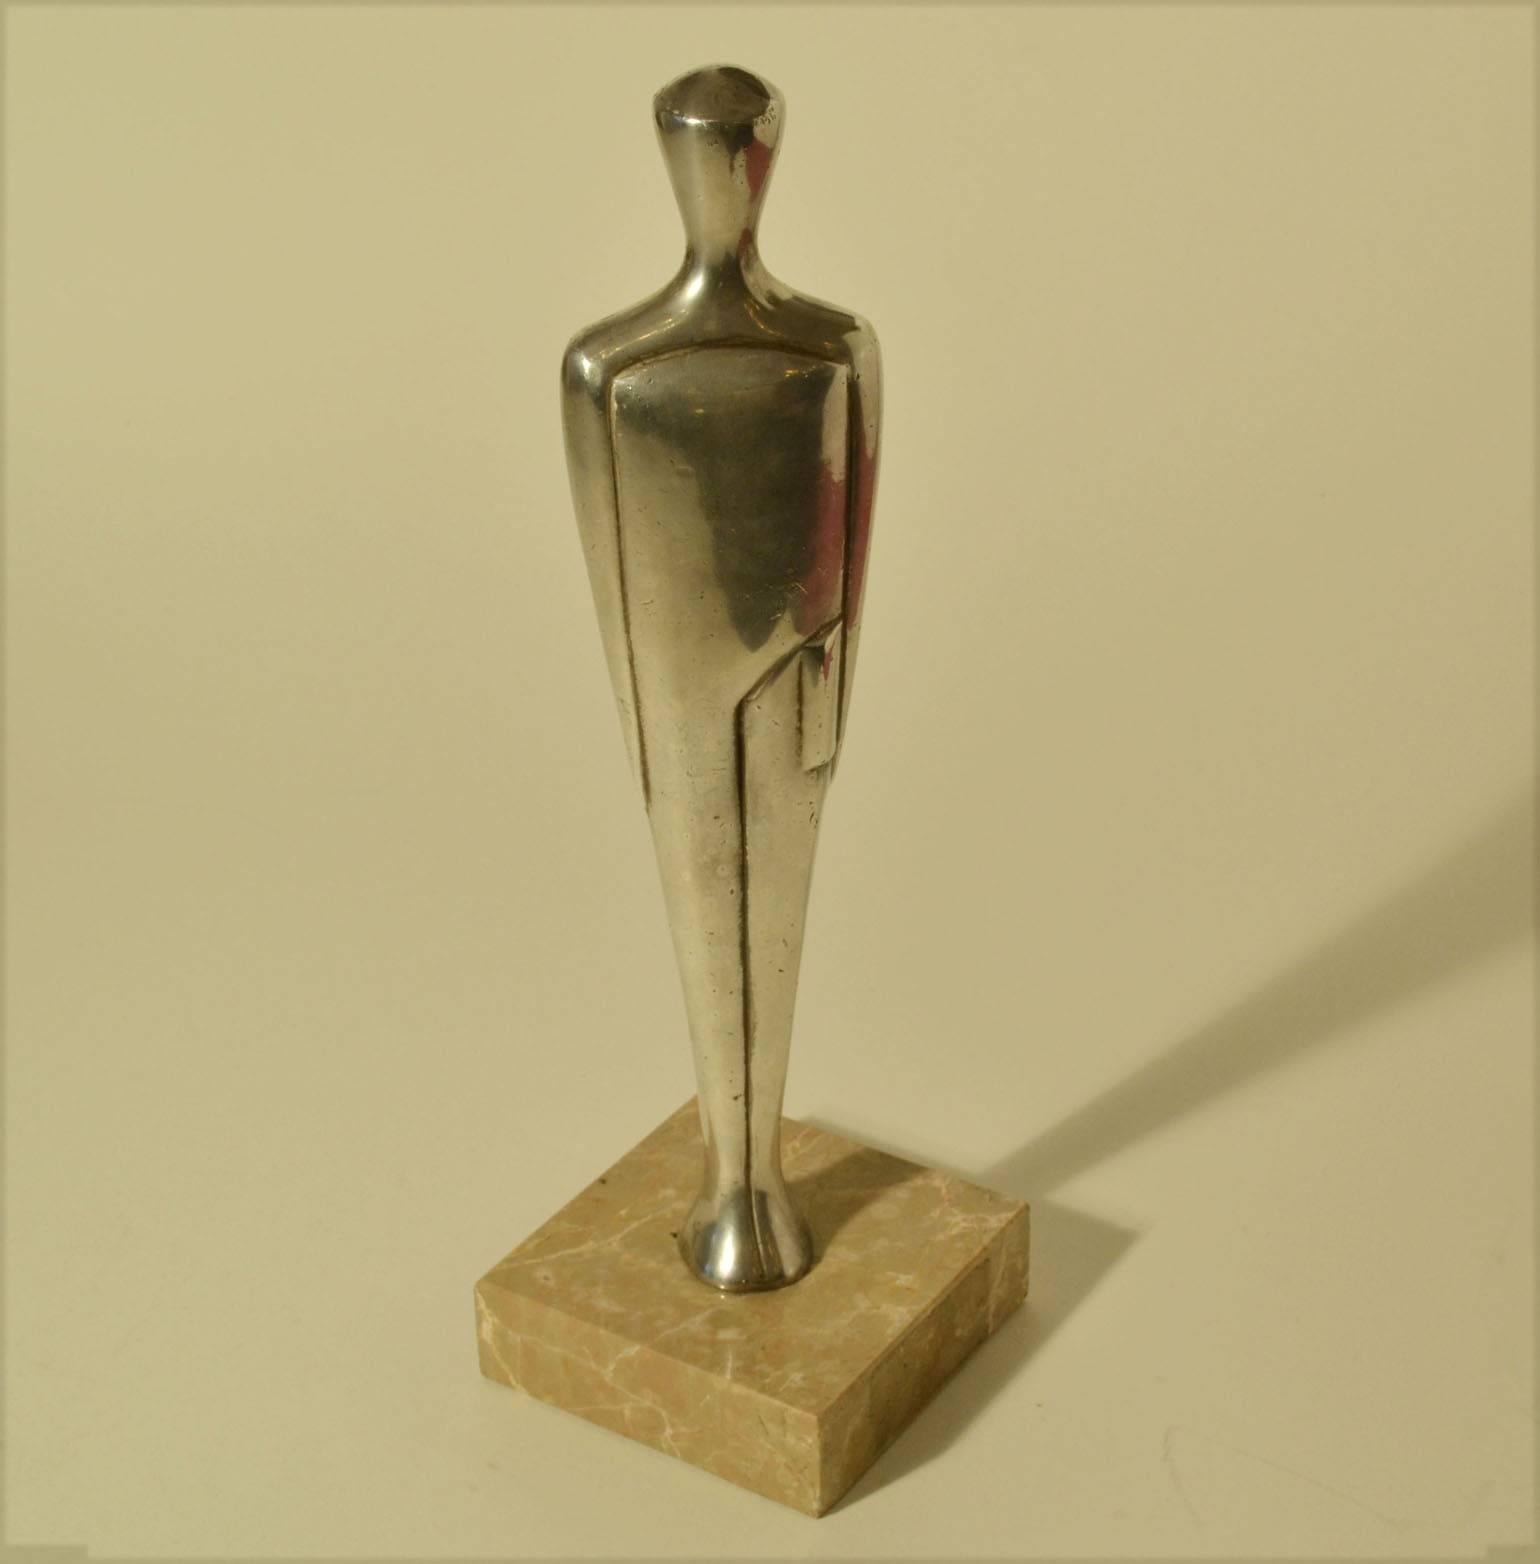 American 1930s Figurative Oscar Sculpture by E.W. Lane